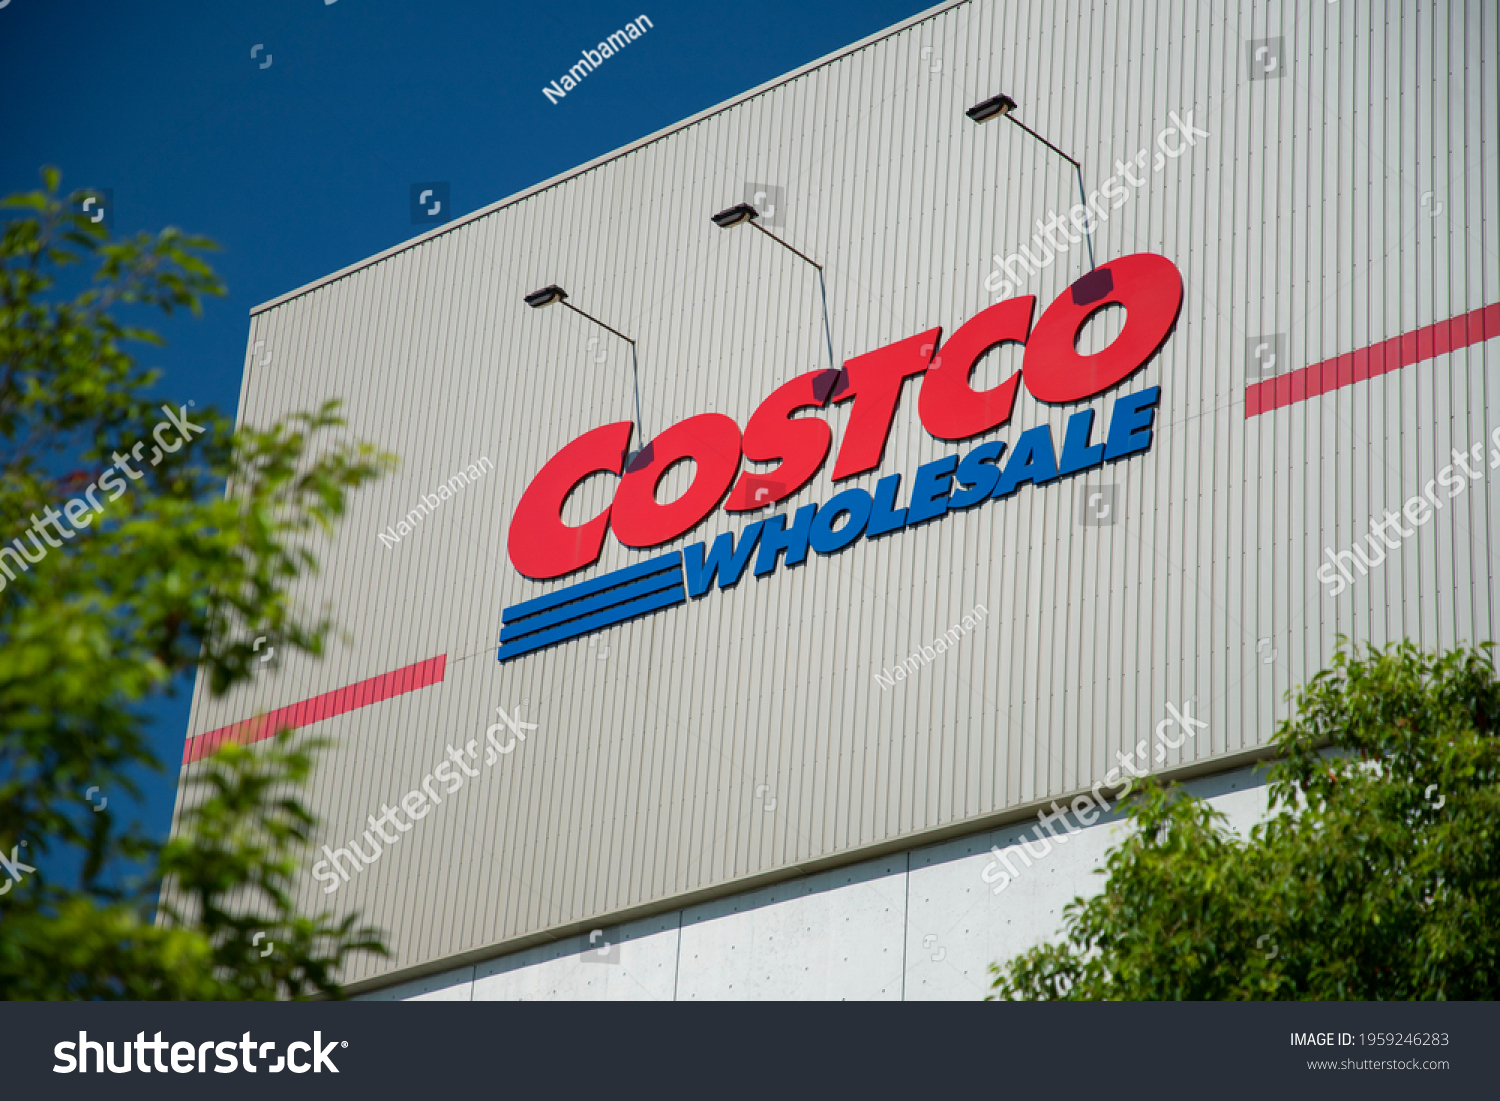 Costco の画像 写真素材 ベクター画像 Shutterstock